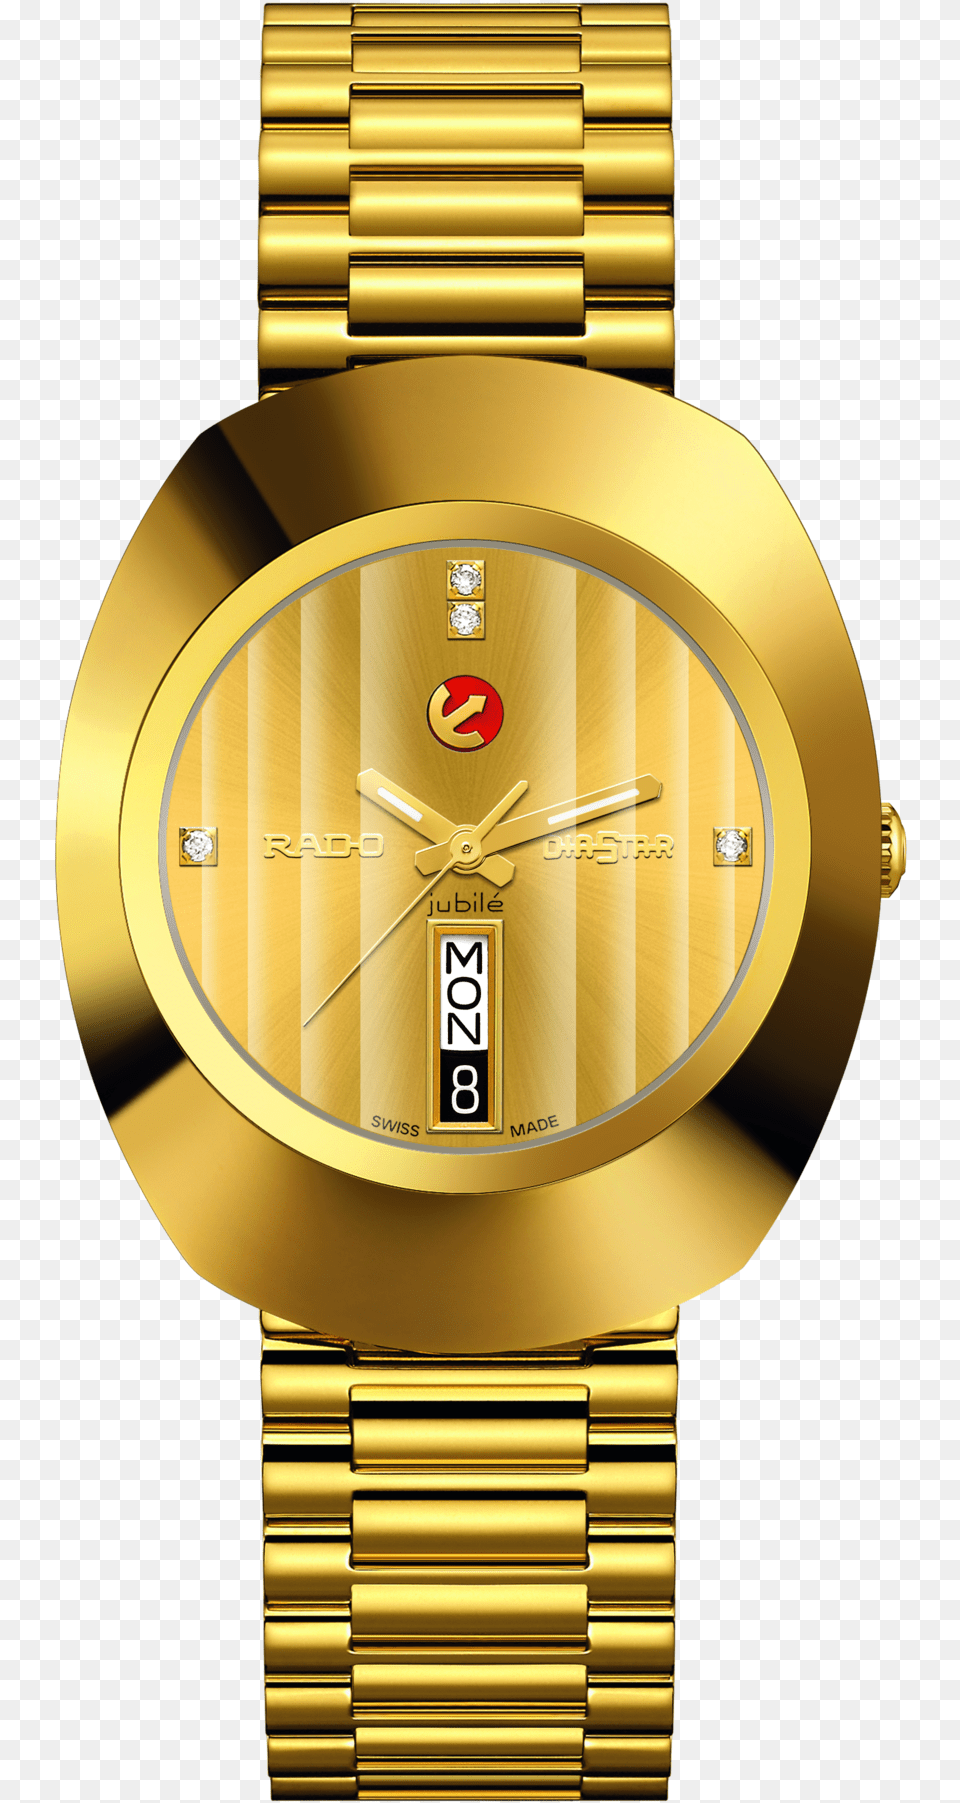 The Original Automatic Diamonds Rado Watches Arm, Body Part, Person, Wristwatch Png Image